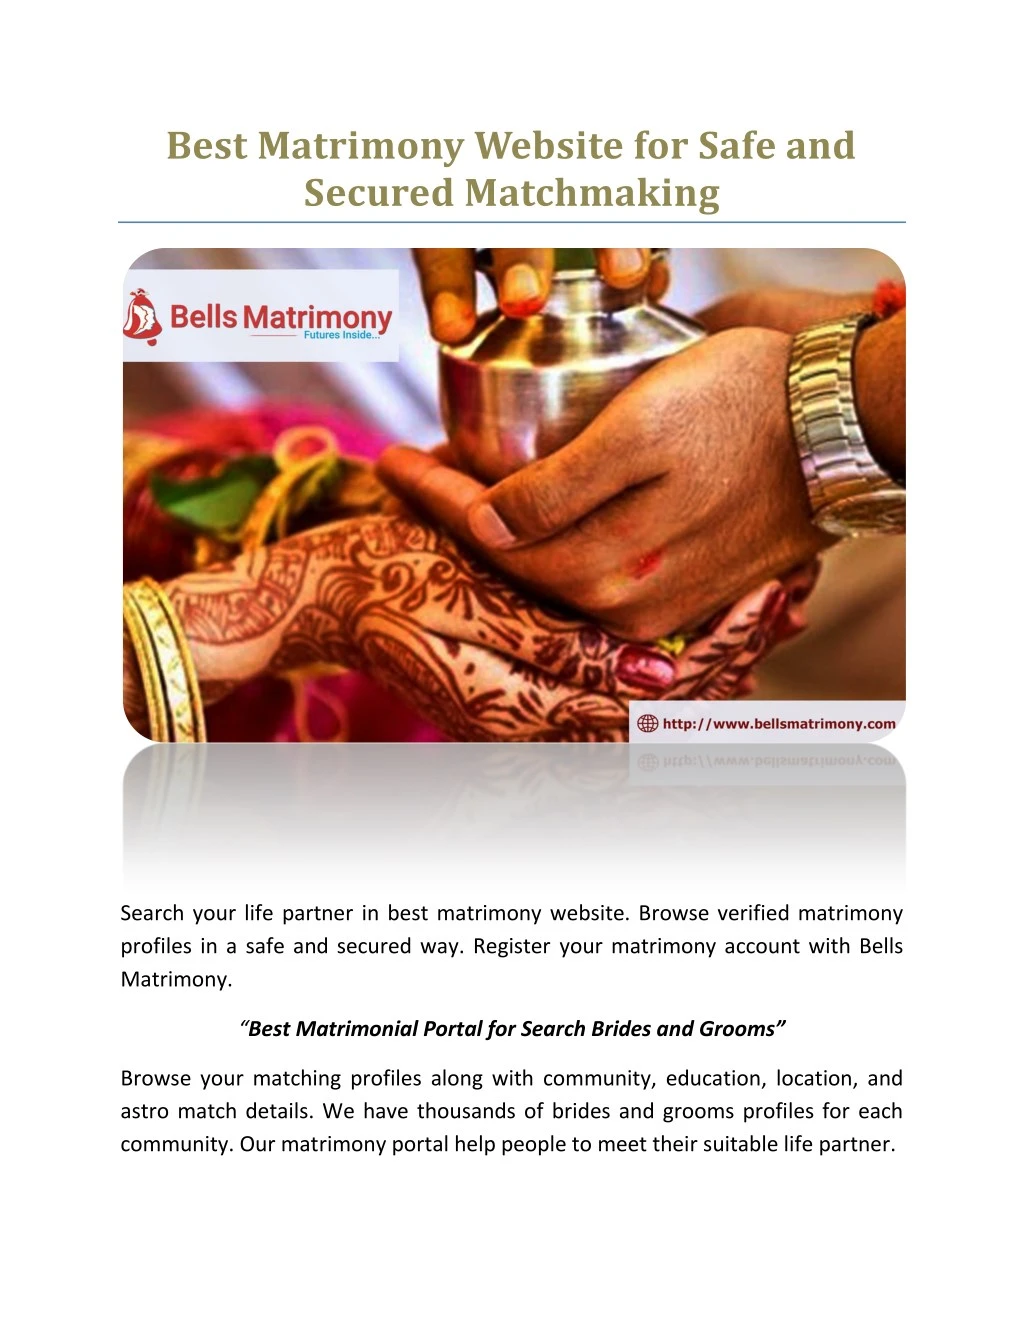 best matrimony website for safe and secured